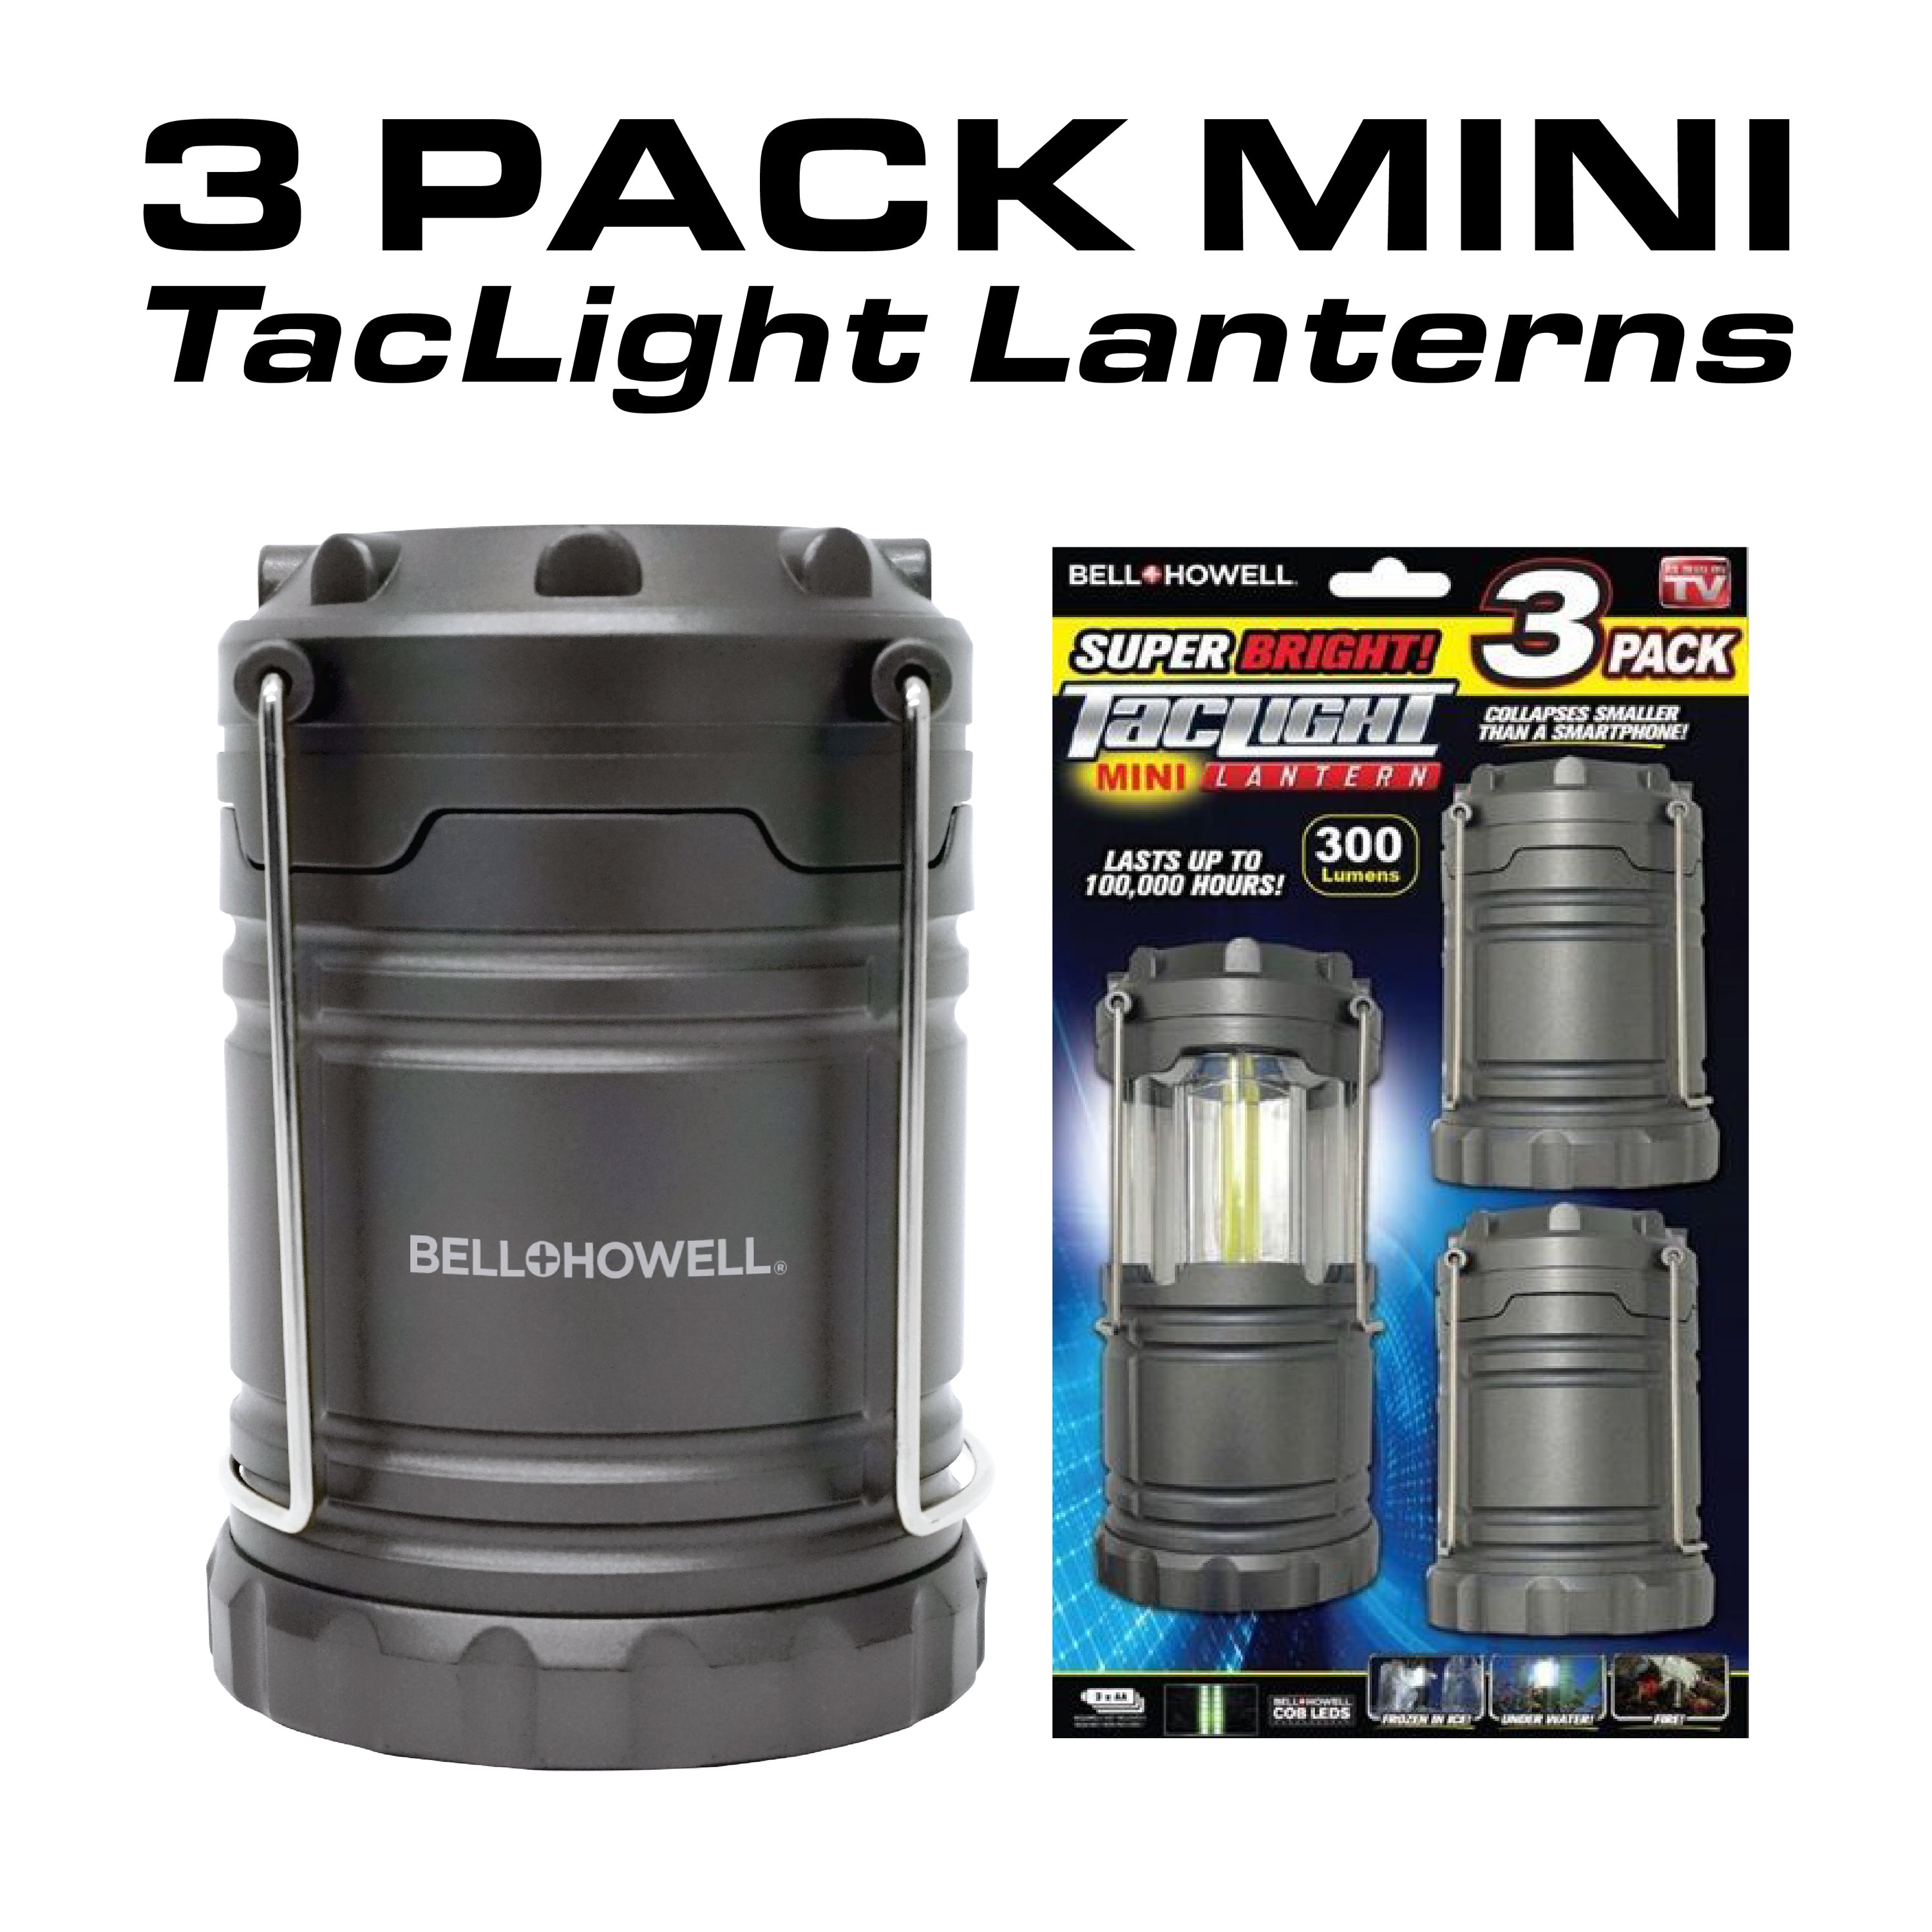 Bell + Howell TacLight Lantern Mini - 3 Pack Multipack